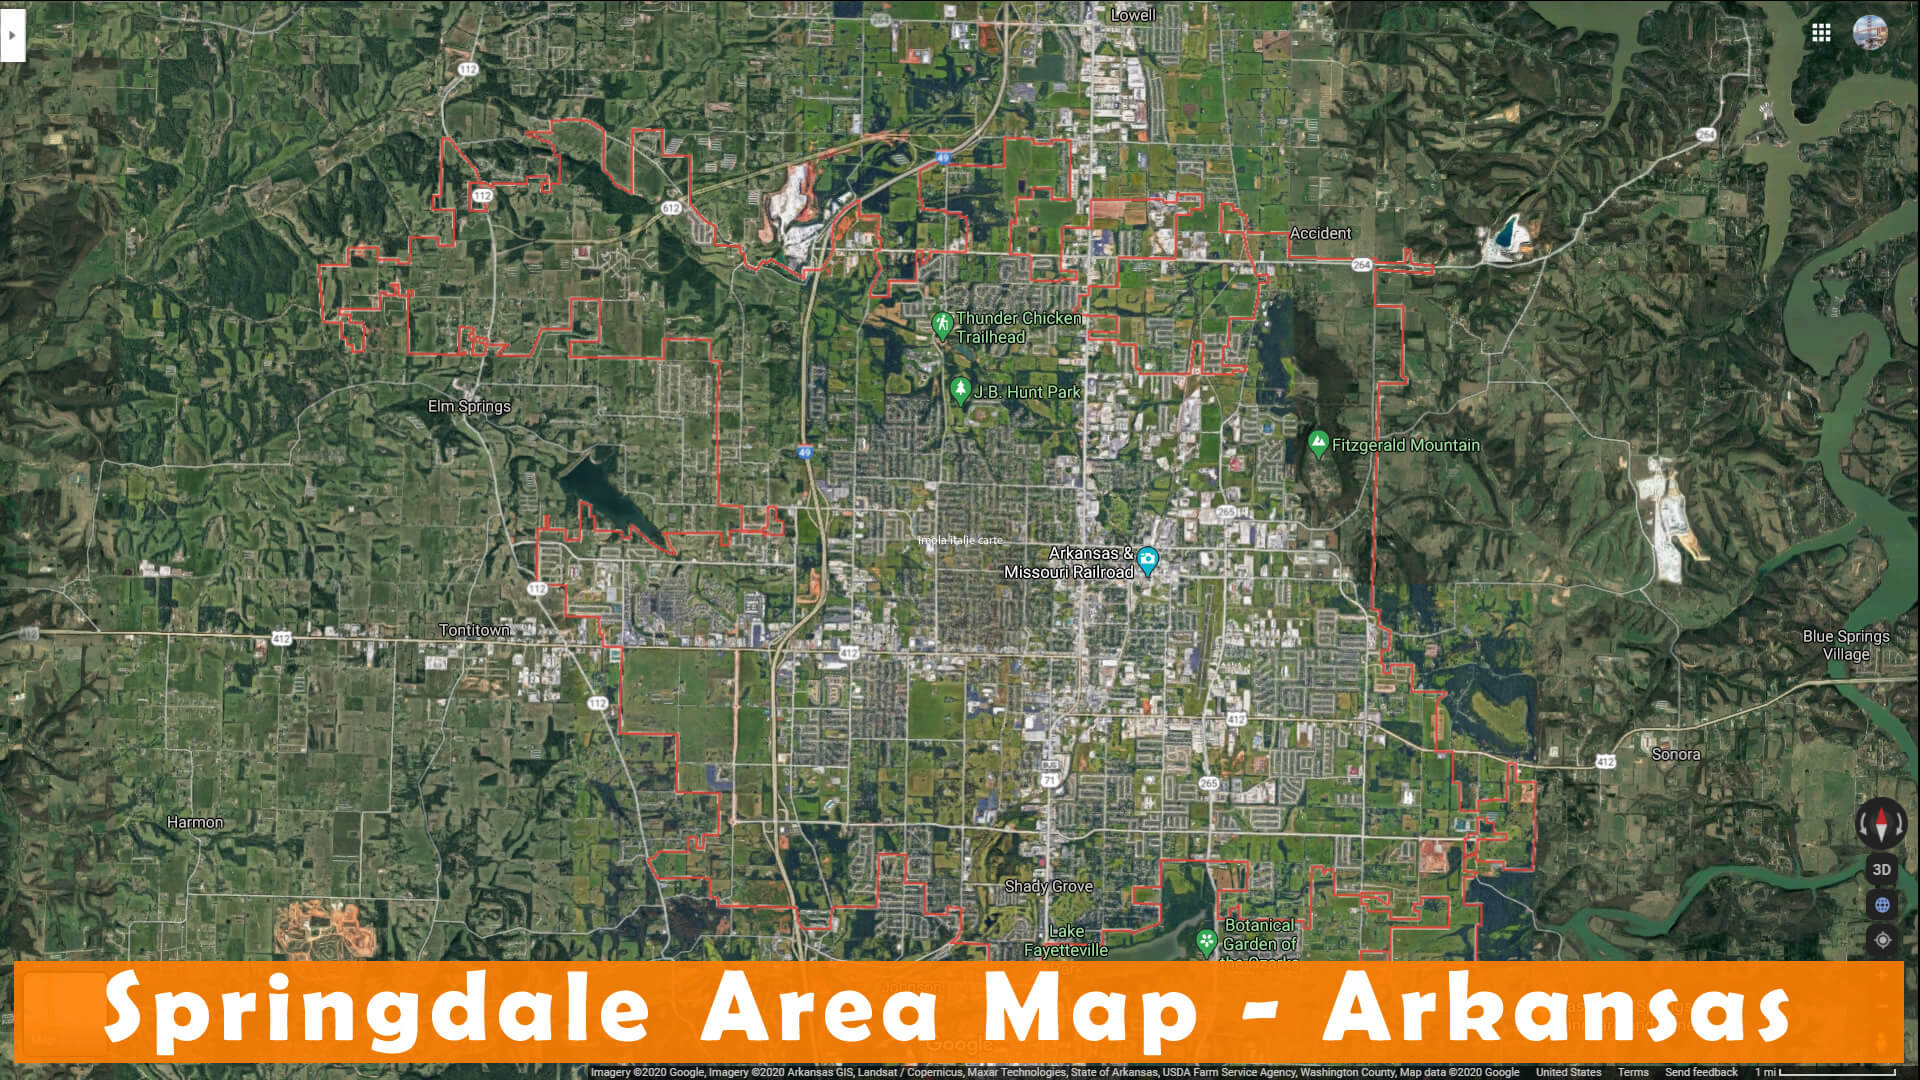 Springdale Area Map Arkansas